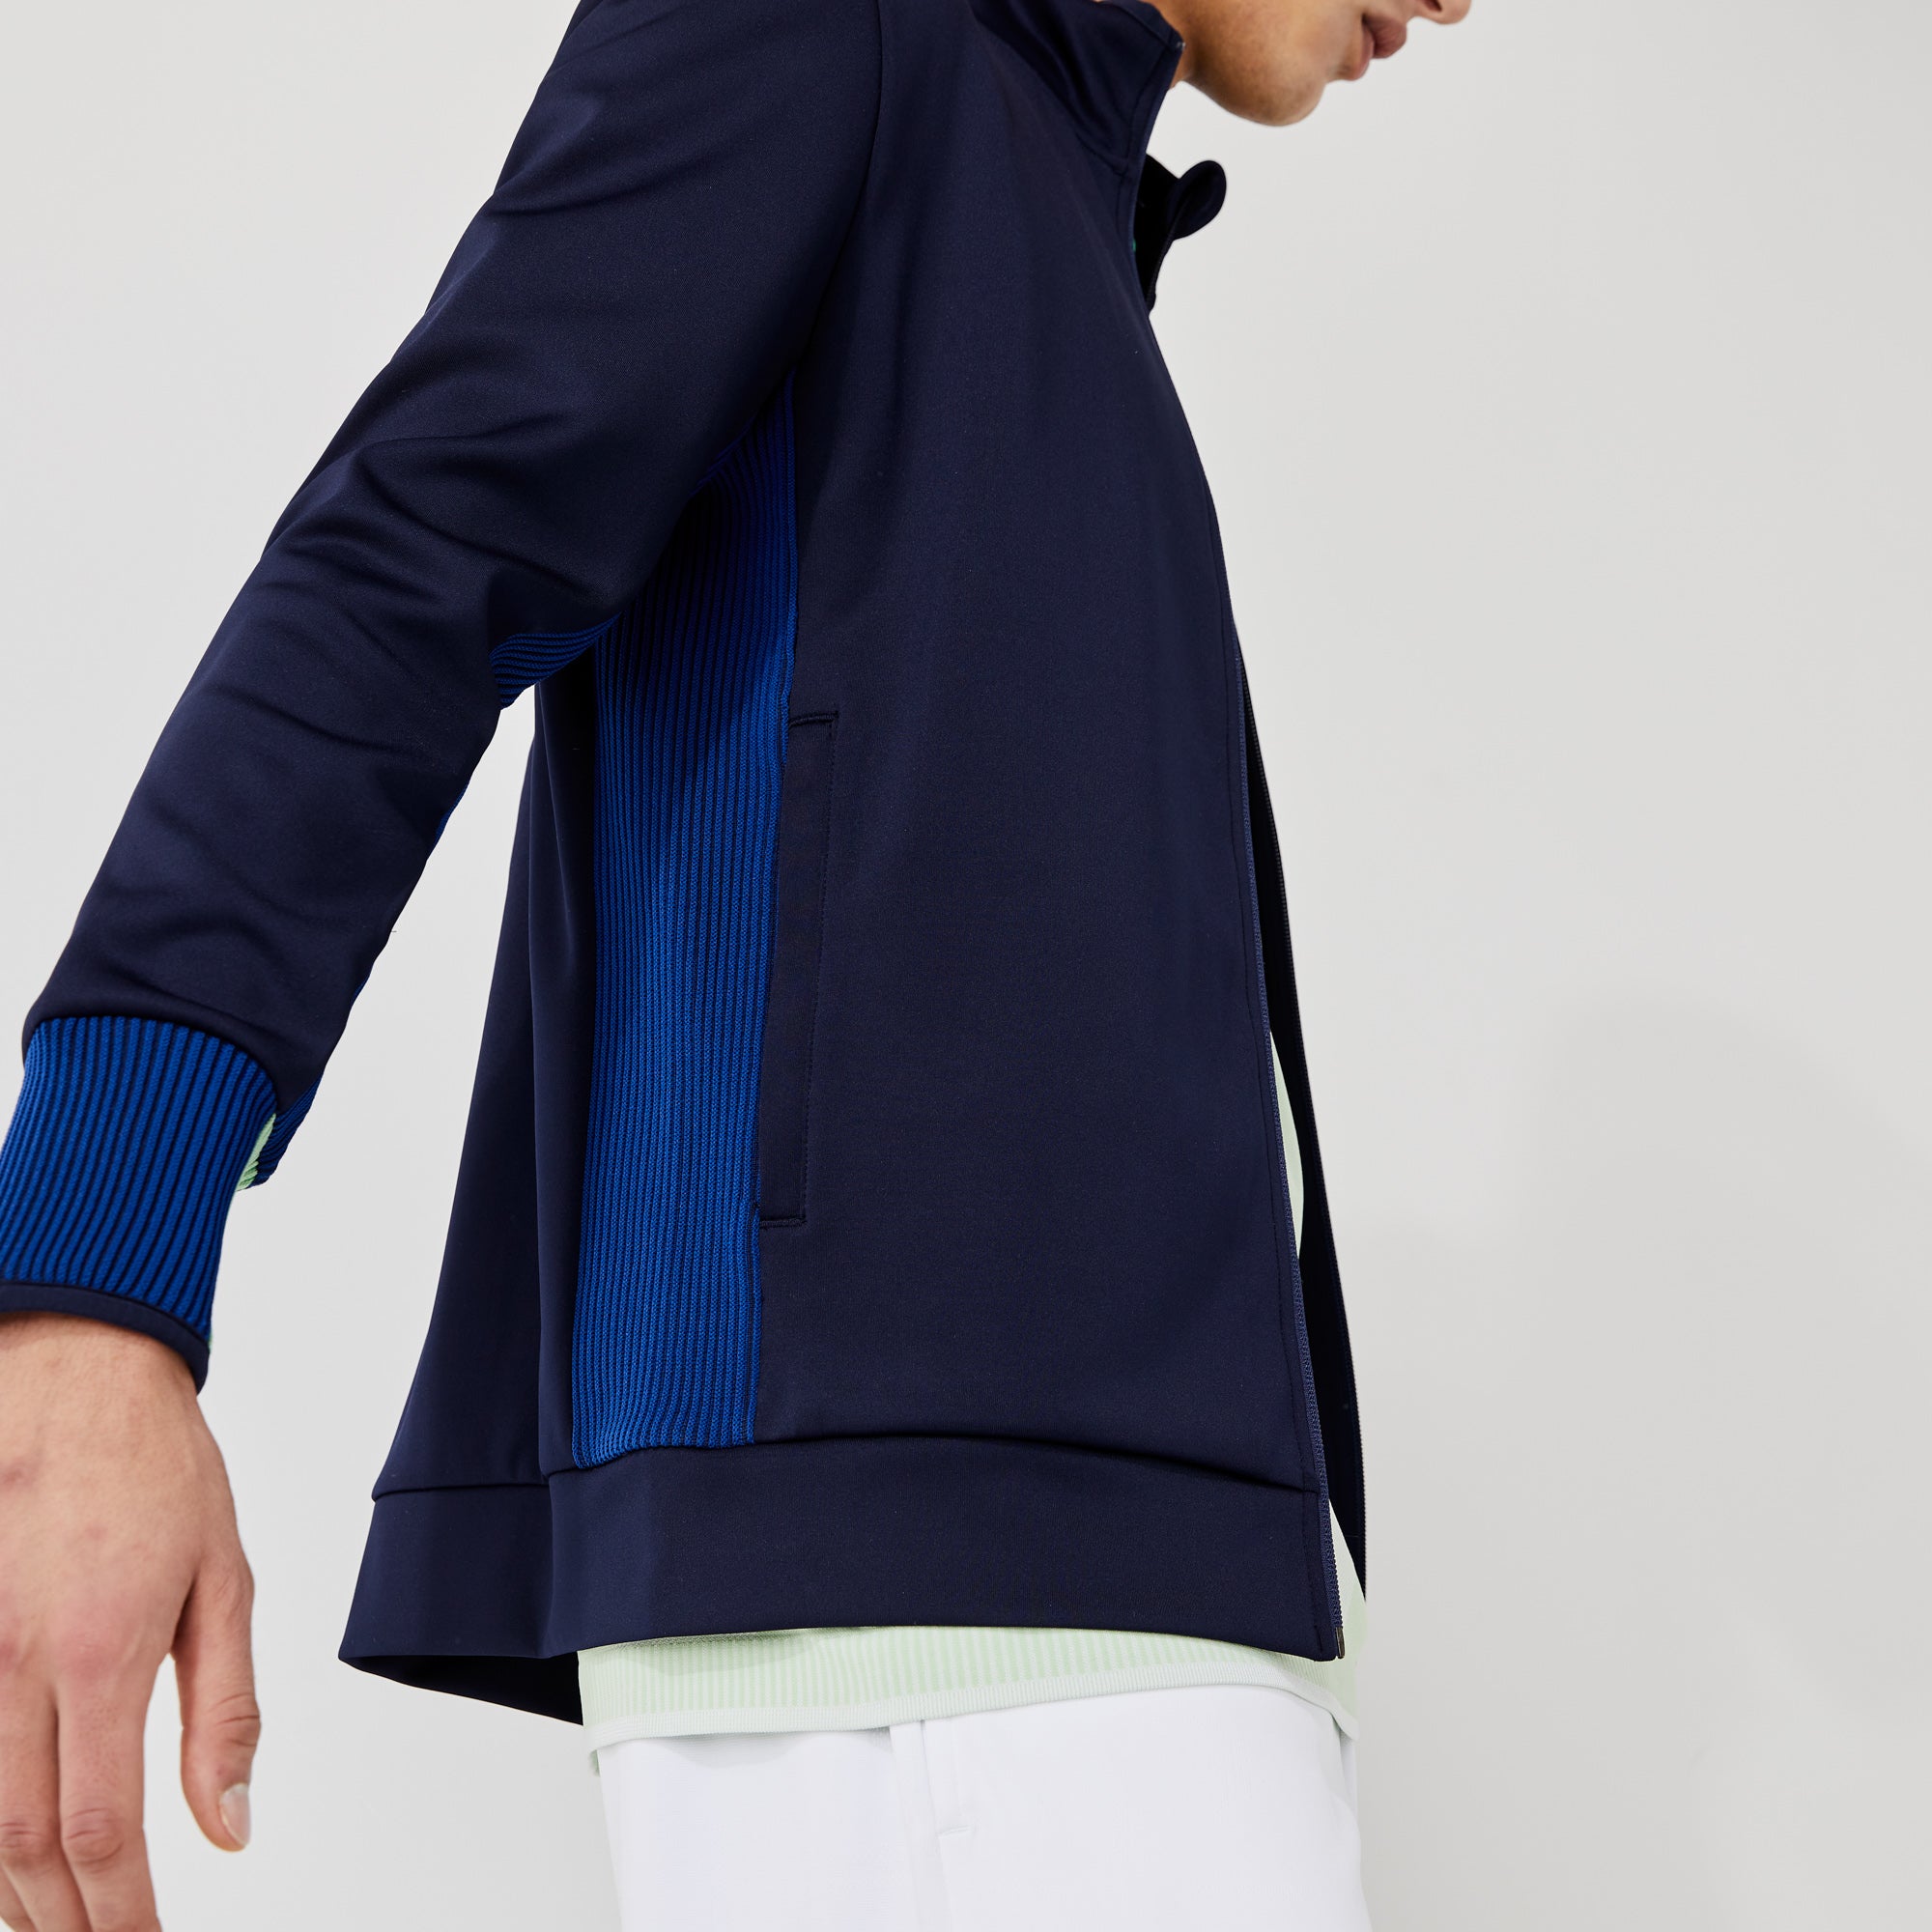 Lacoste Men's Tennis Jacket Blue (4)